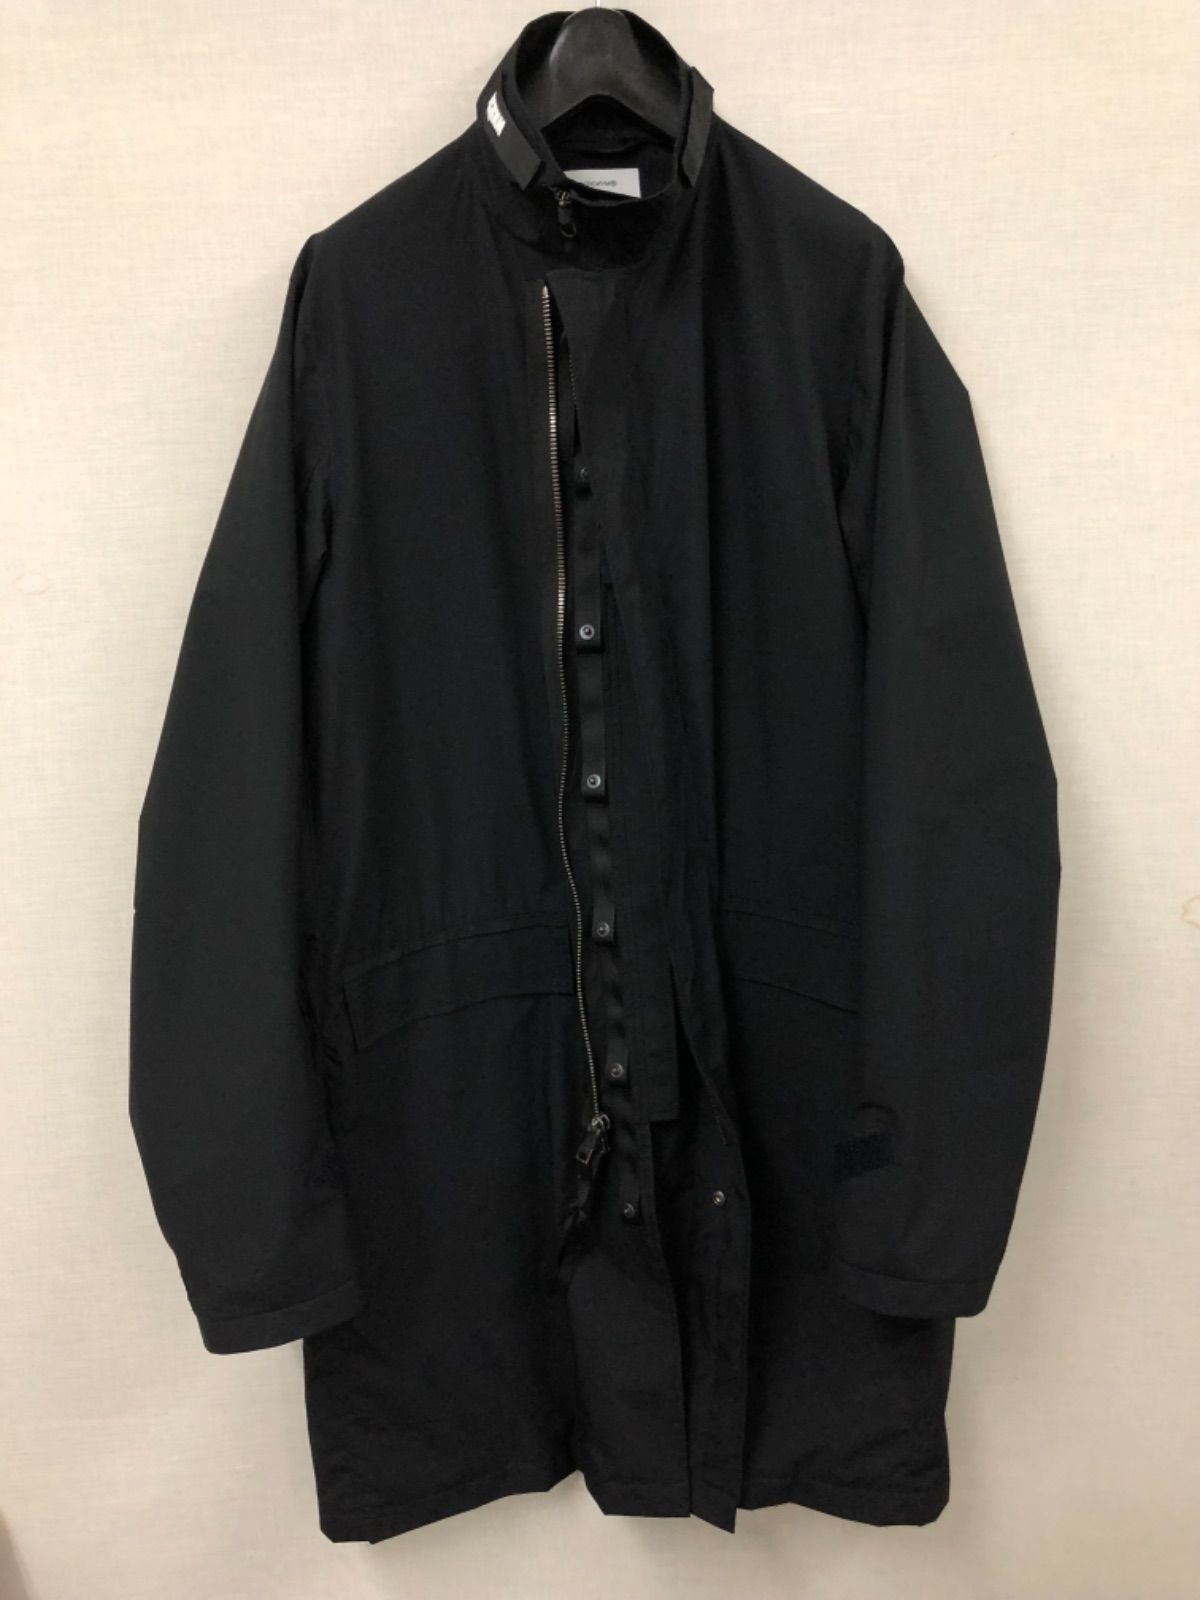 Acronym J46-WS Coat Black S size